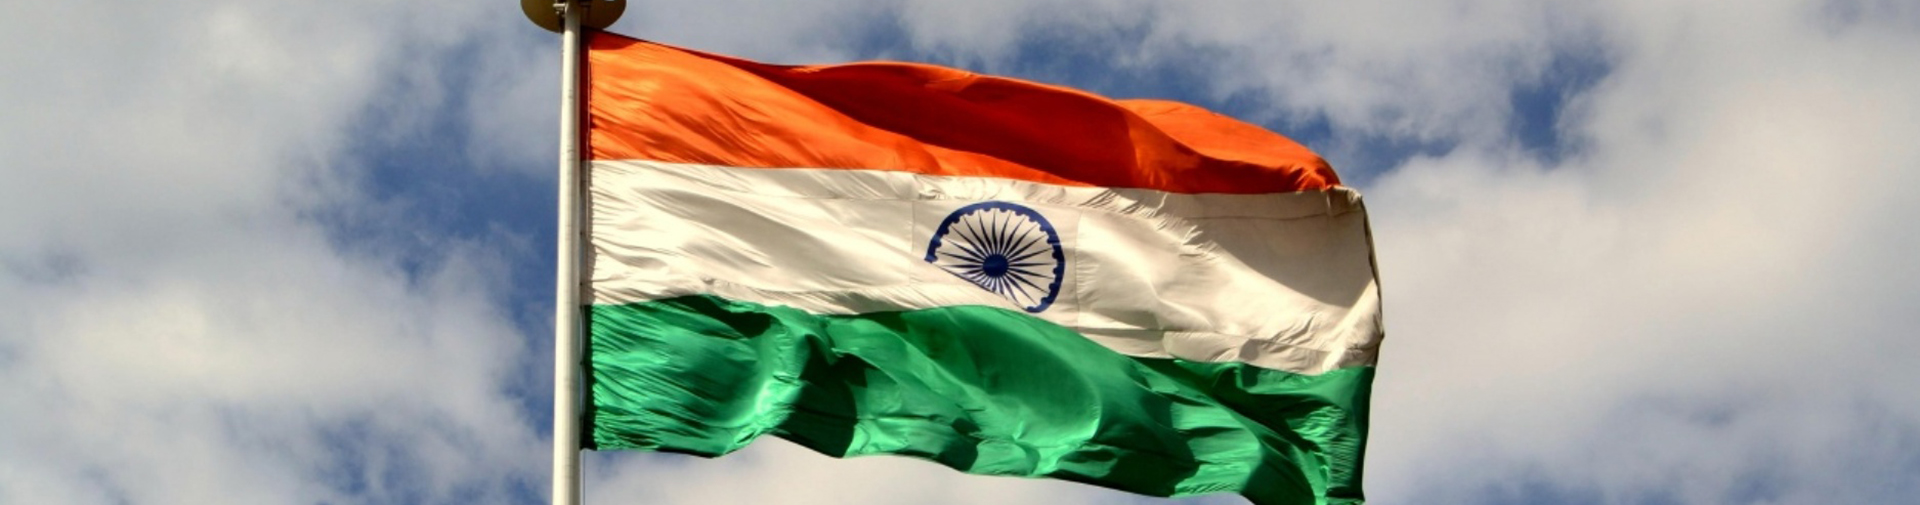 india_flag_1920x504